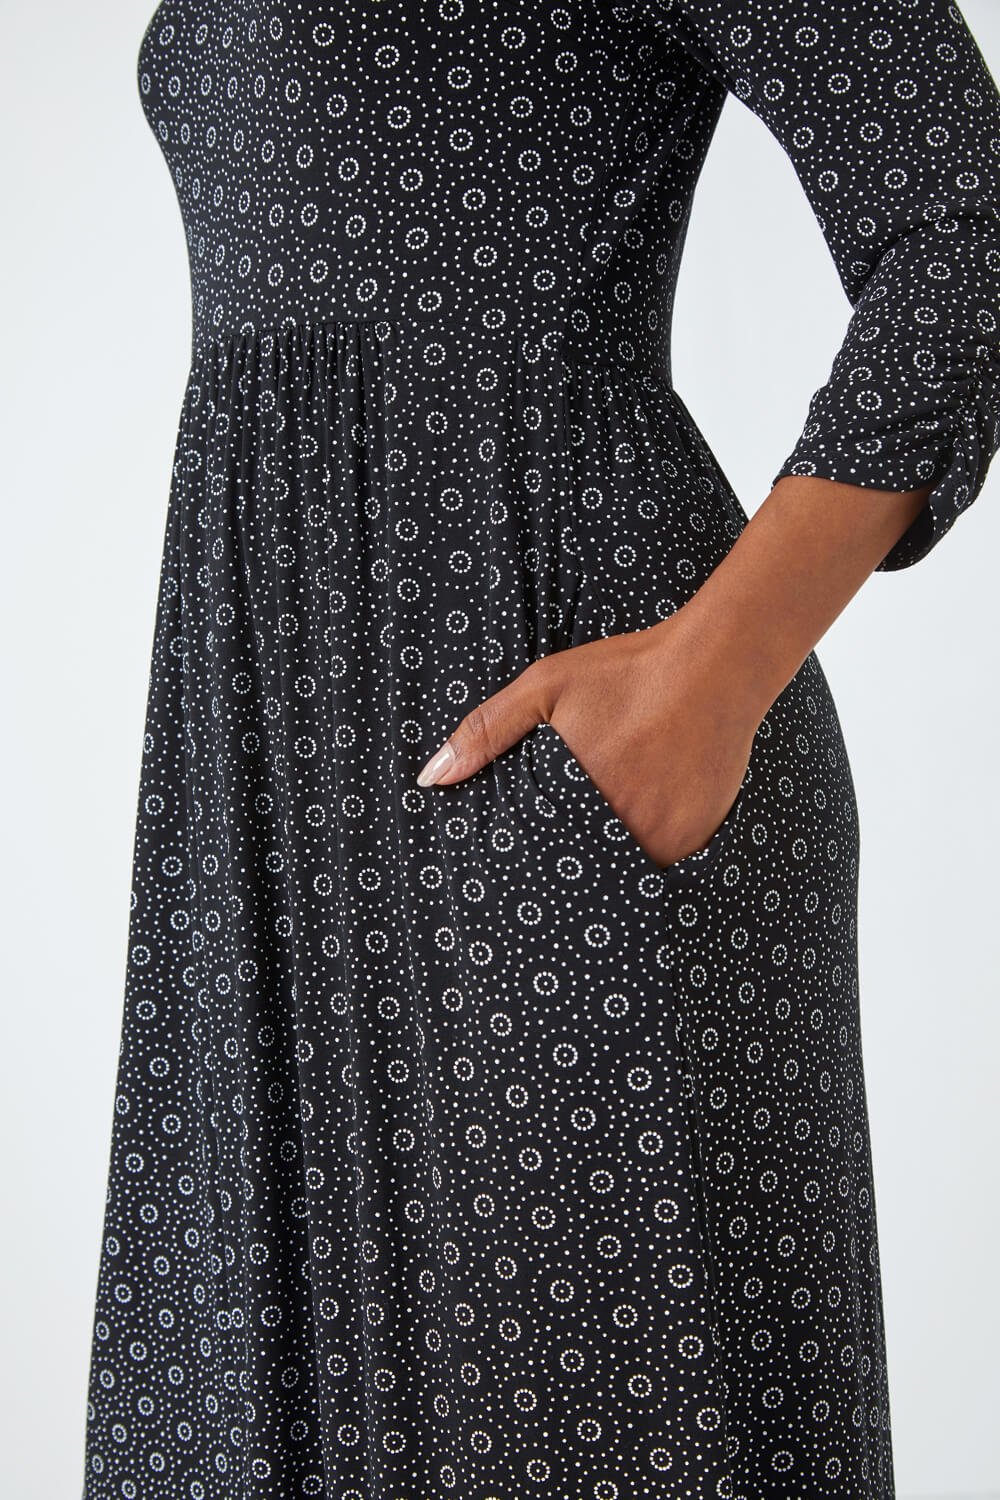 Black Petite Spot Pocket Stretch Ruched Midi Dress, Image 5 of 5